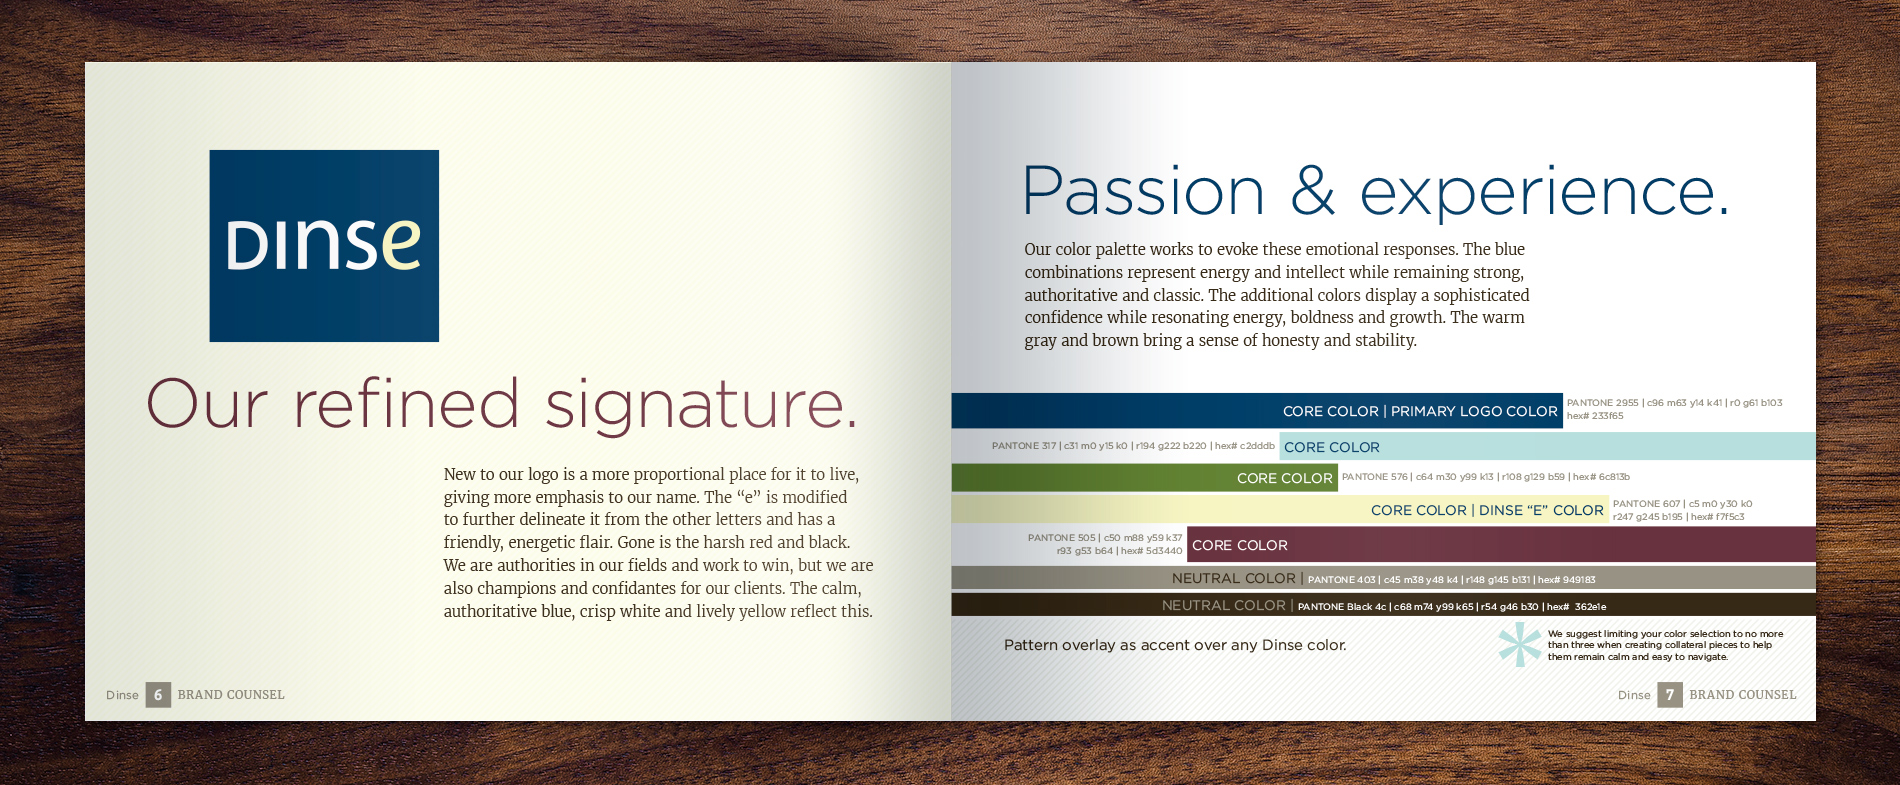 Dinse brand identity book design